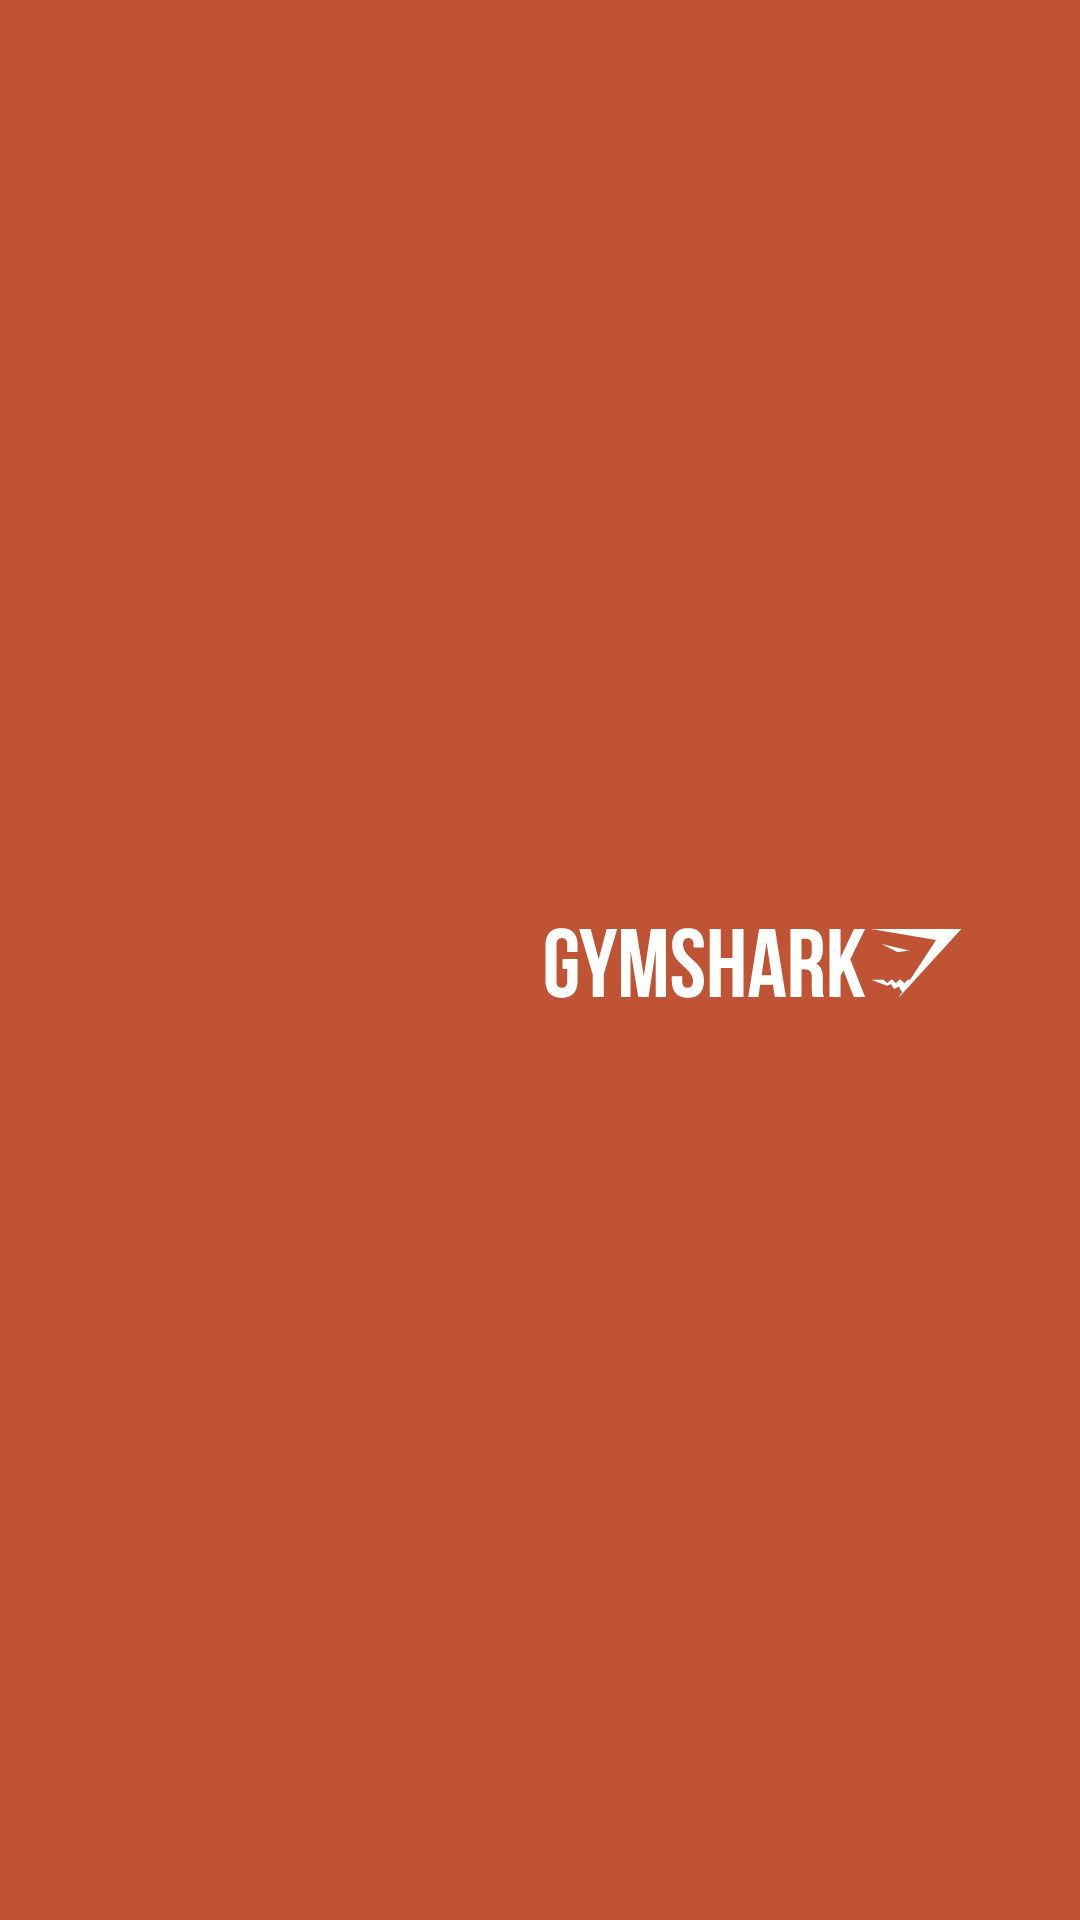 The Official Gymshark wallpaper. Pro Perform, Burnt Orange. #Gymshark #Wallpaper #iPhone #Background #Pattern